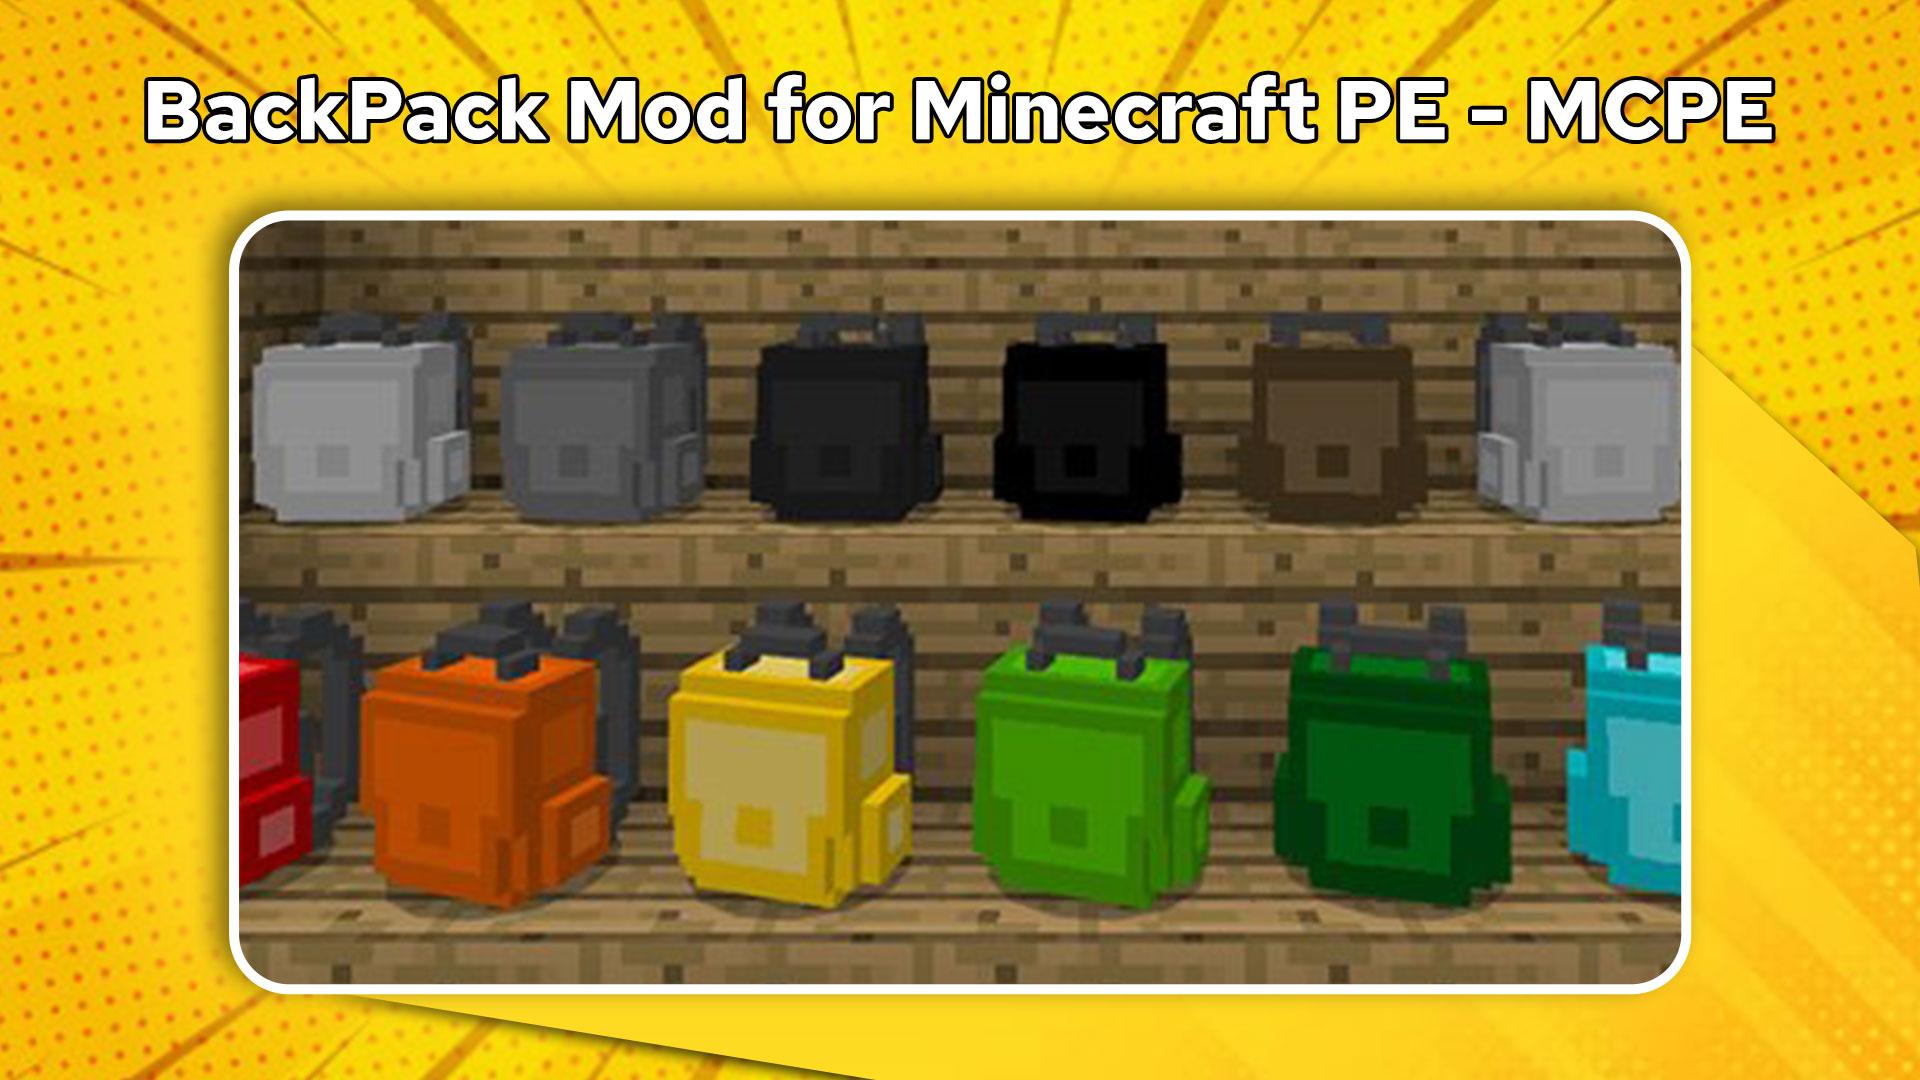 Battery mod pack. Backpack Mod. Randomizer Mod Pack..